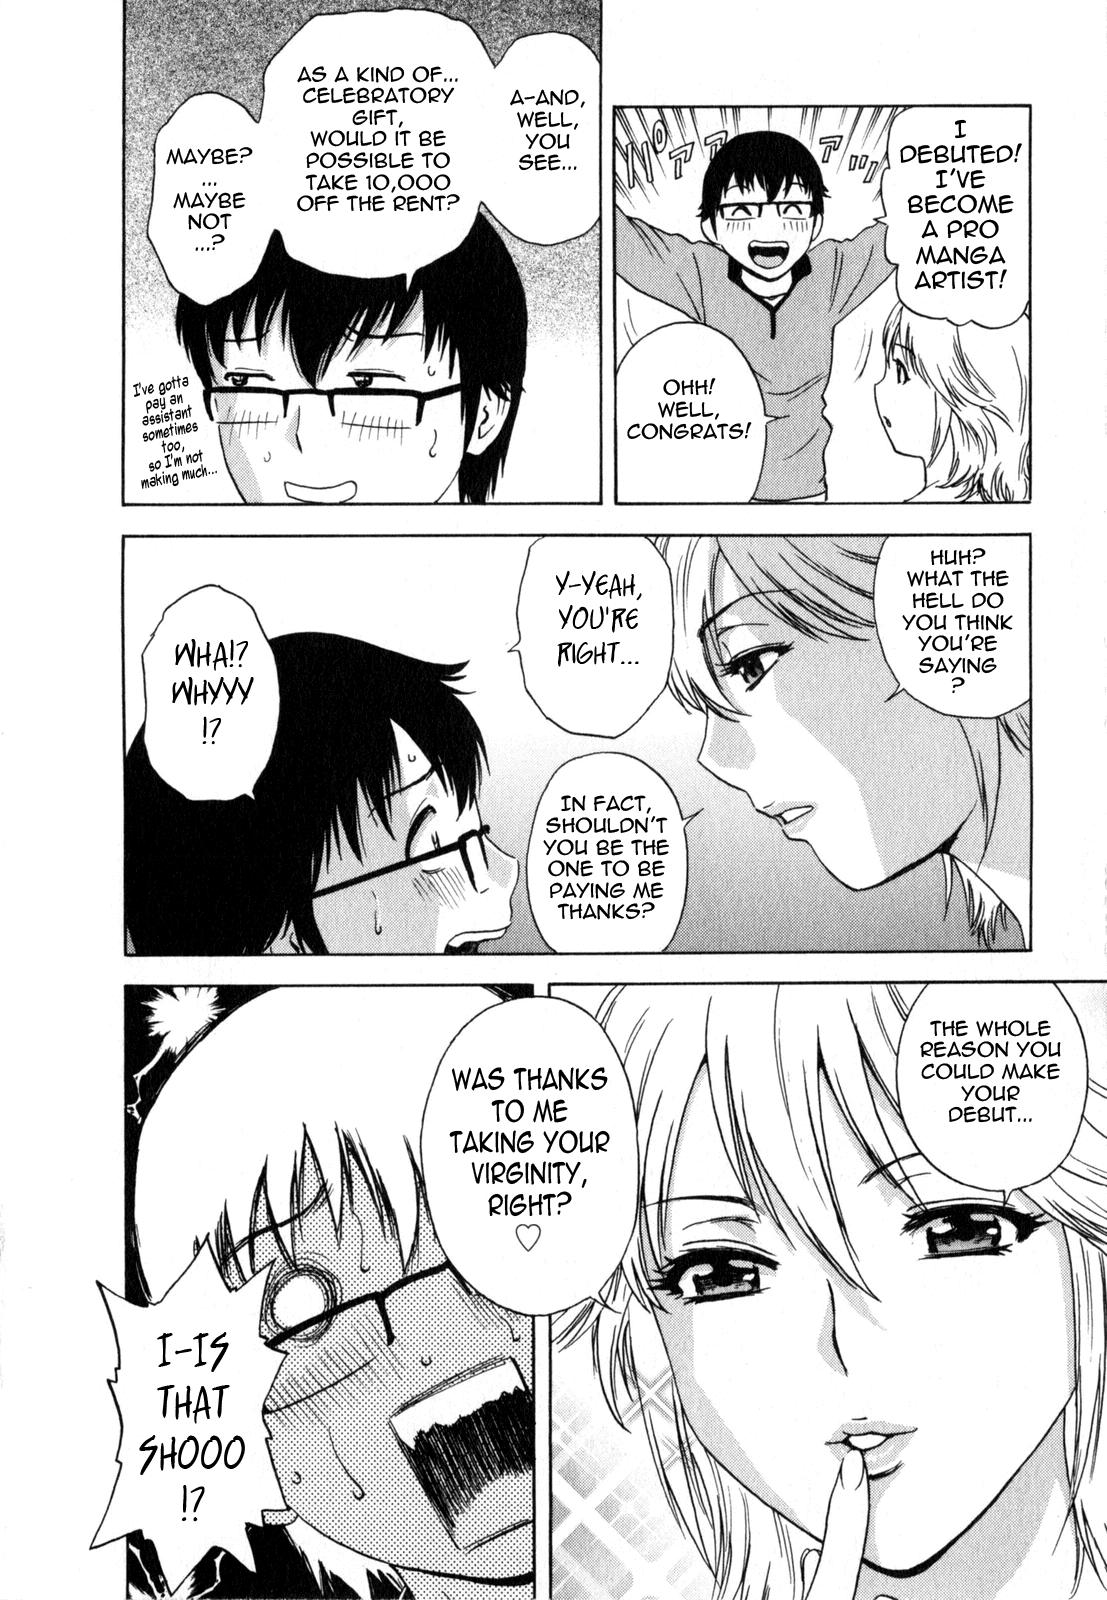 [Hidemaru] Life with Married Women Just Like a Manga 2 - Ch. 1-7 [English] {Tadanohito} 59